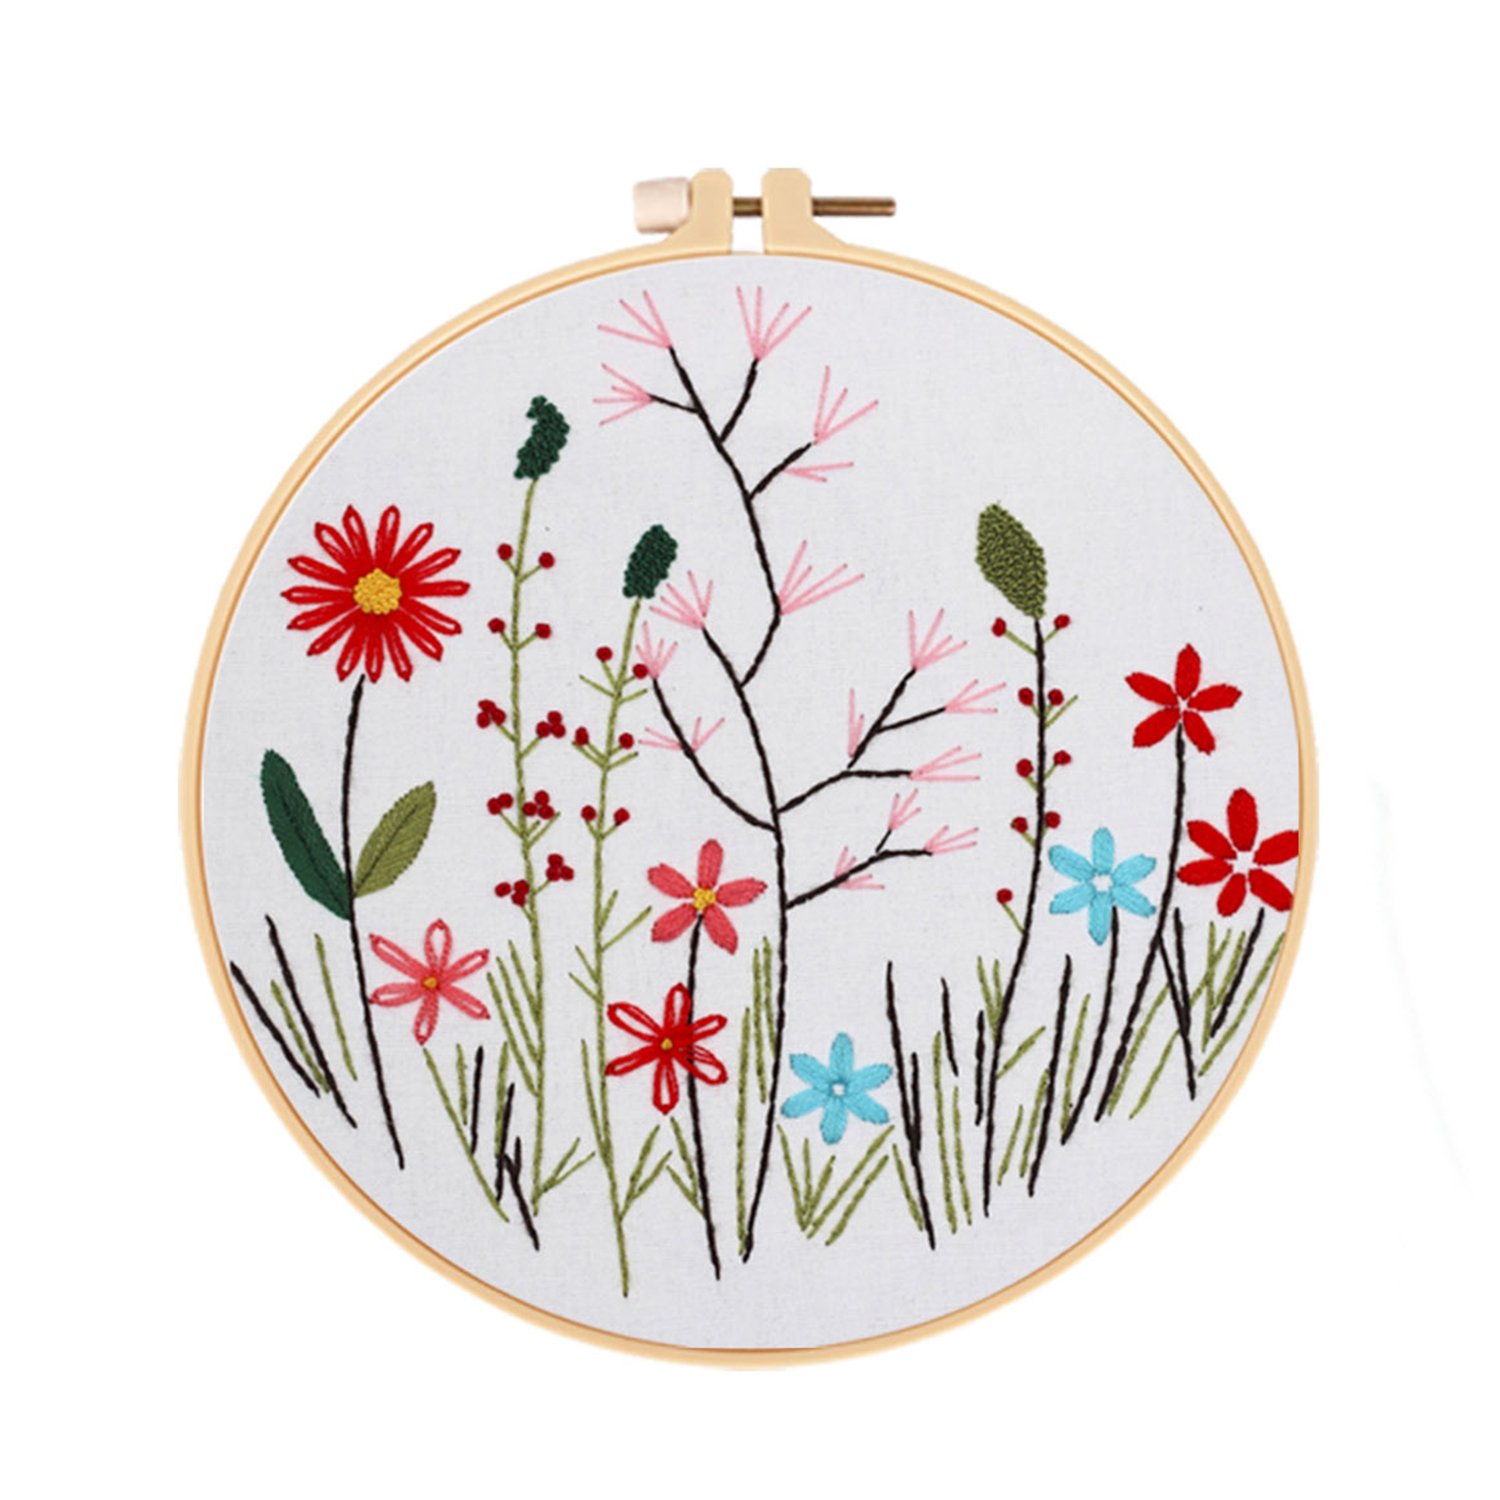 Embroidery Starter Kit Cross stitch kit for Beginners Kids - Flower Pattern